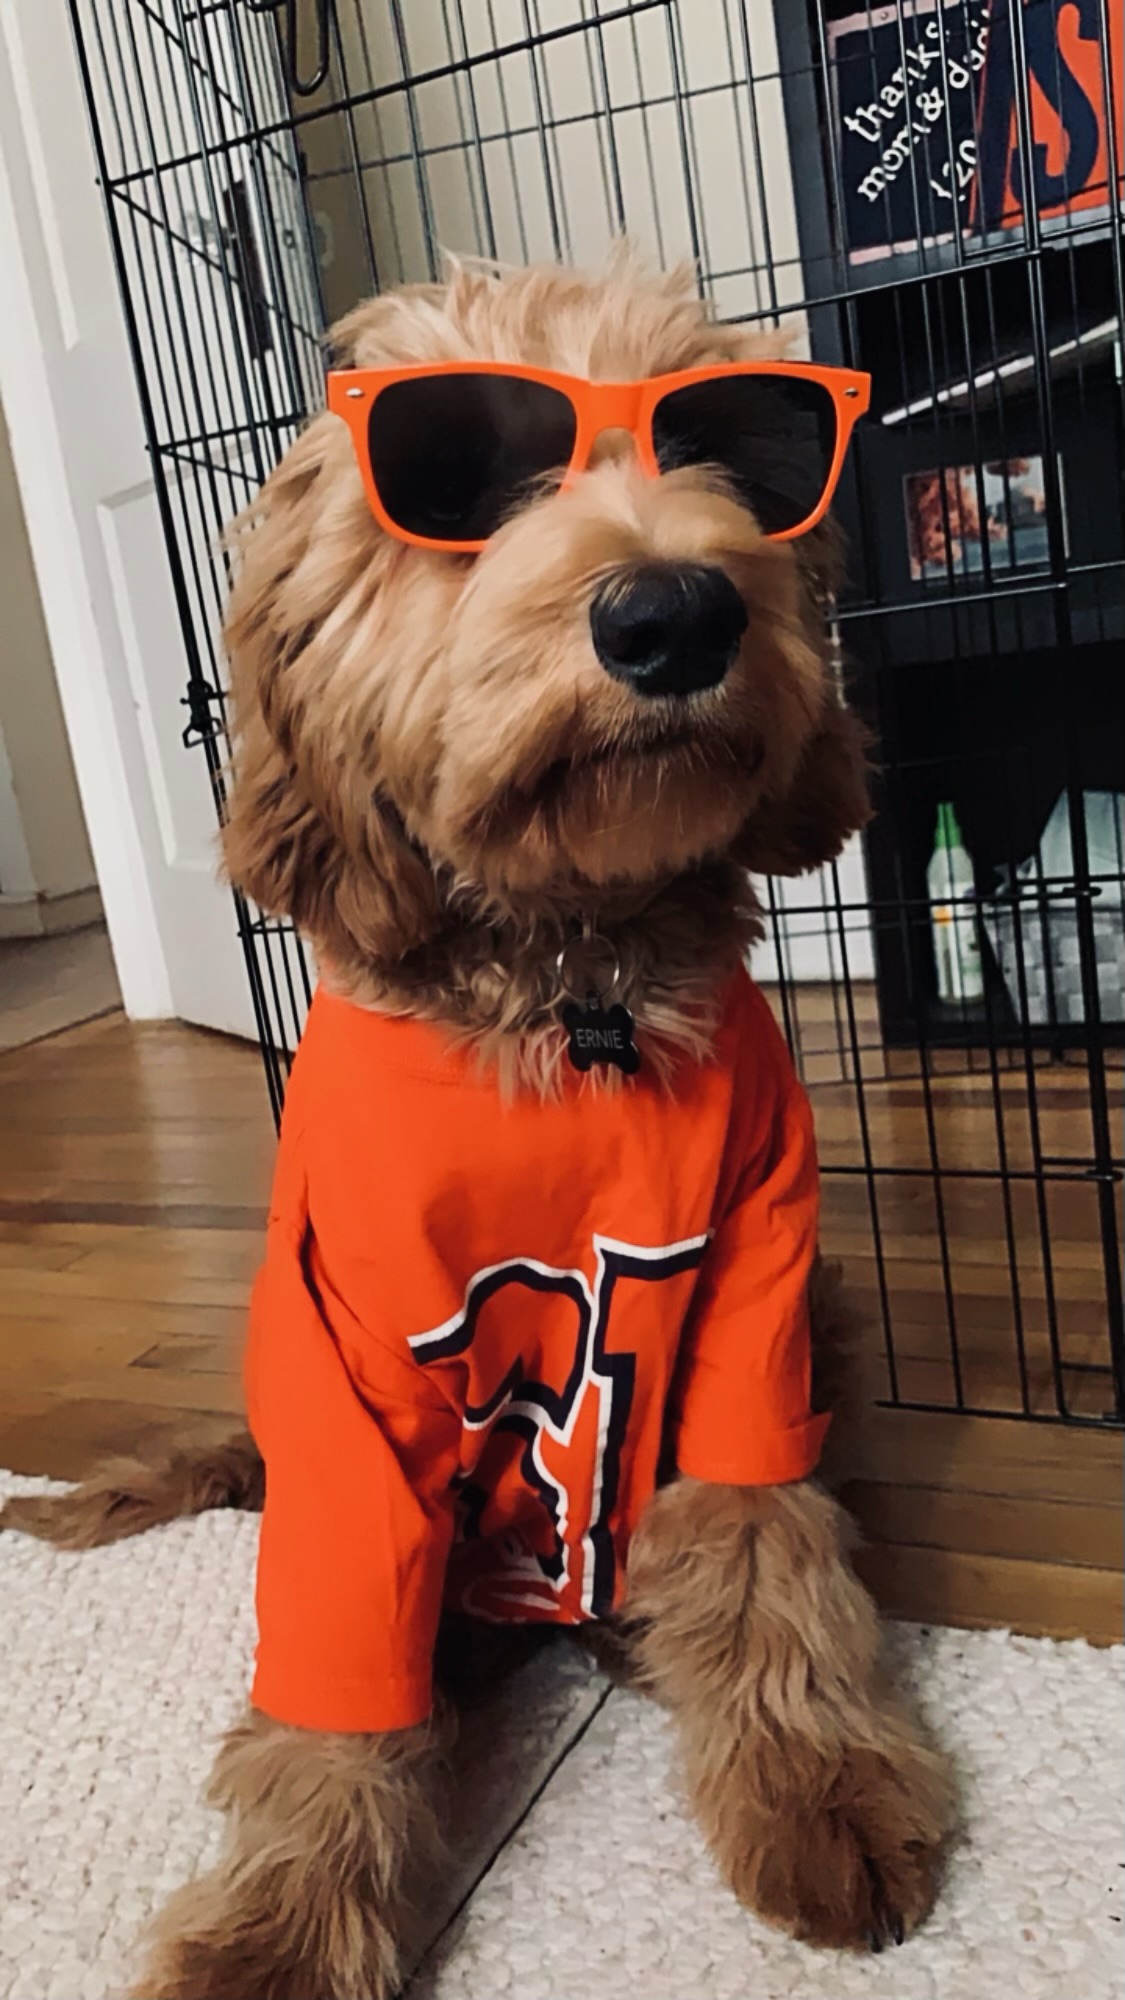 Dog in orange sunglasses and tshirt